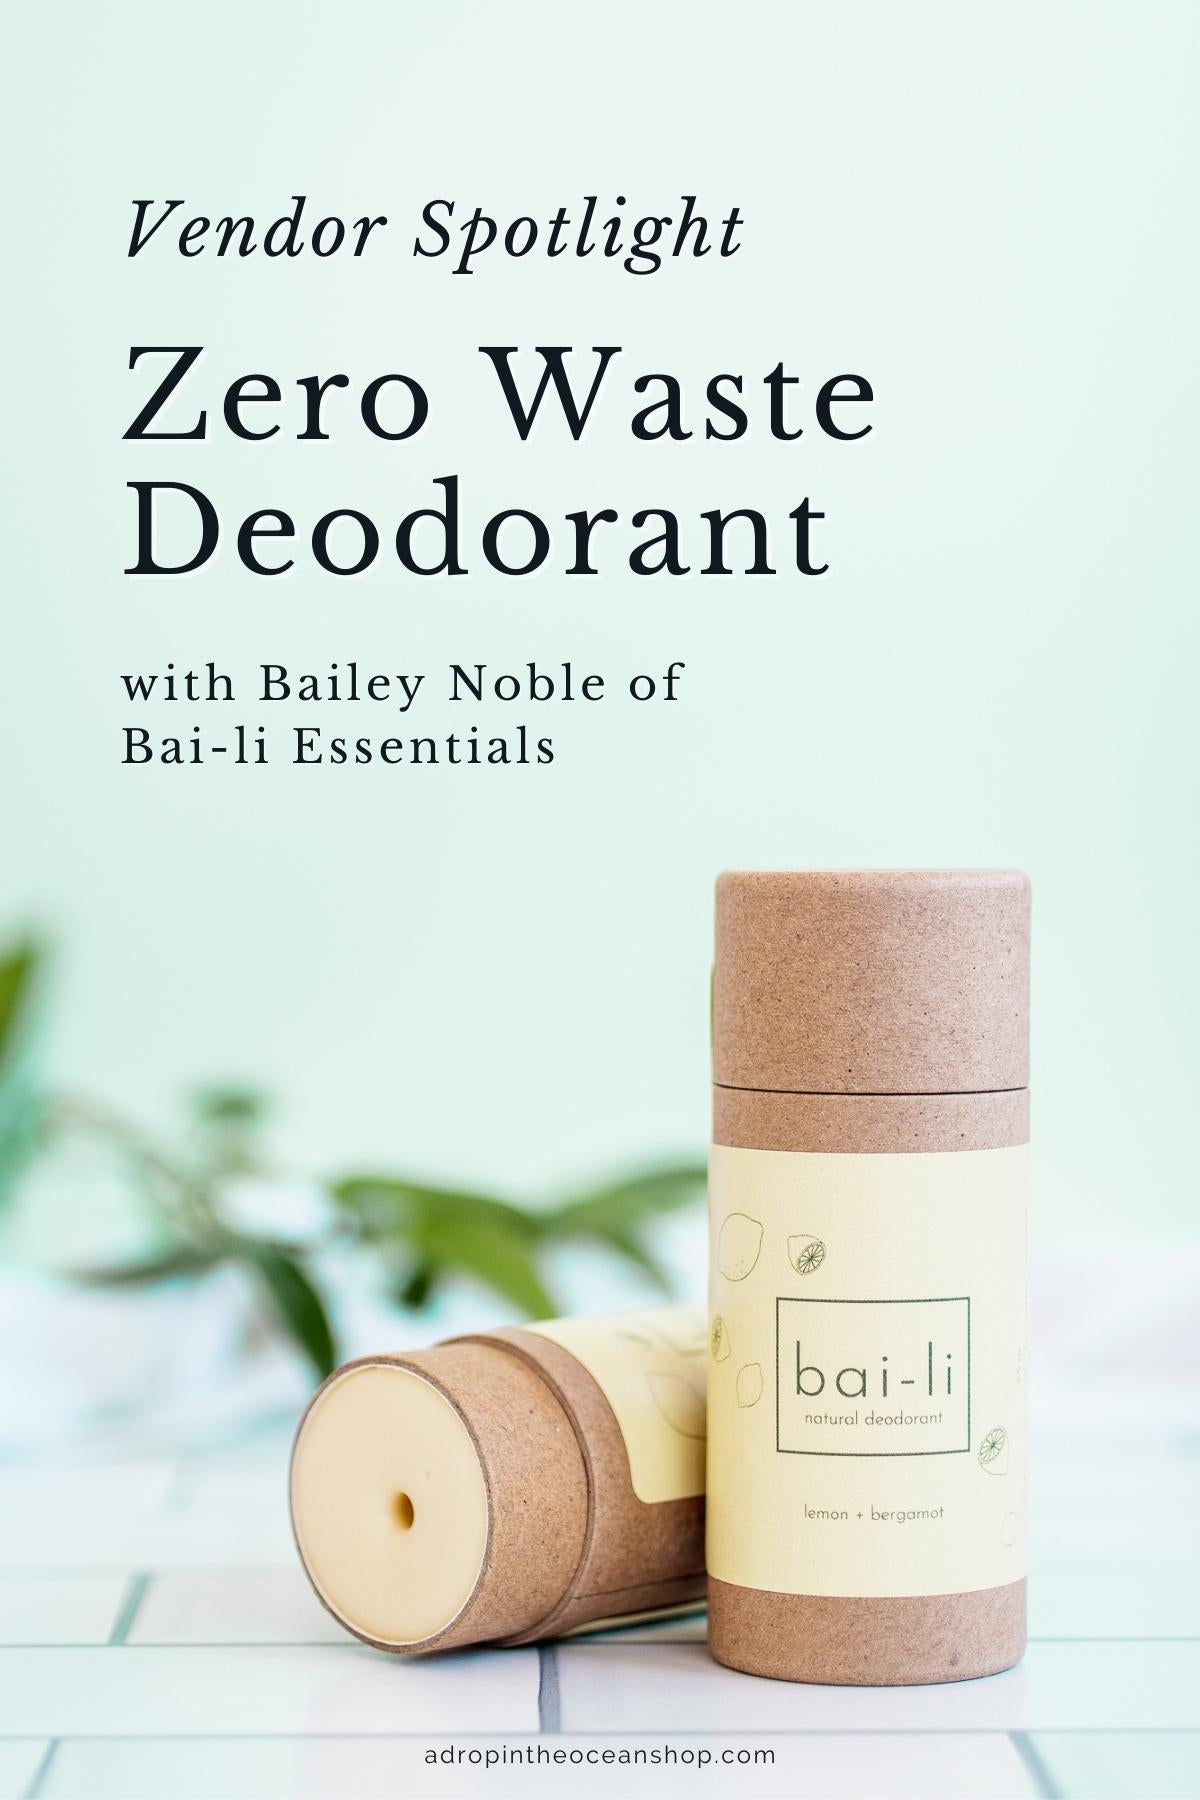 A Drop in the Ocean Shop Zero Waste Deodorant Vendor Spotlight with Bai-li Essentials